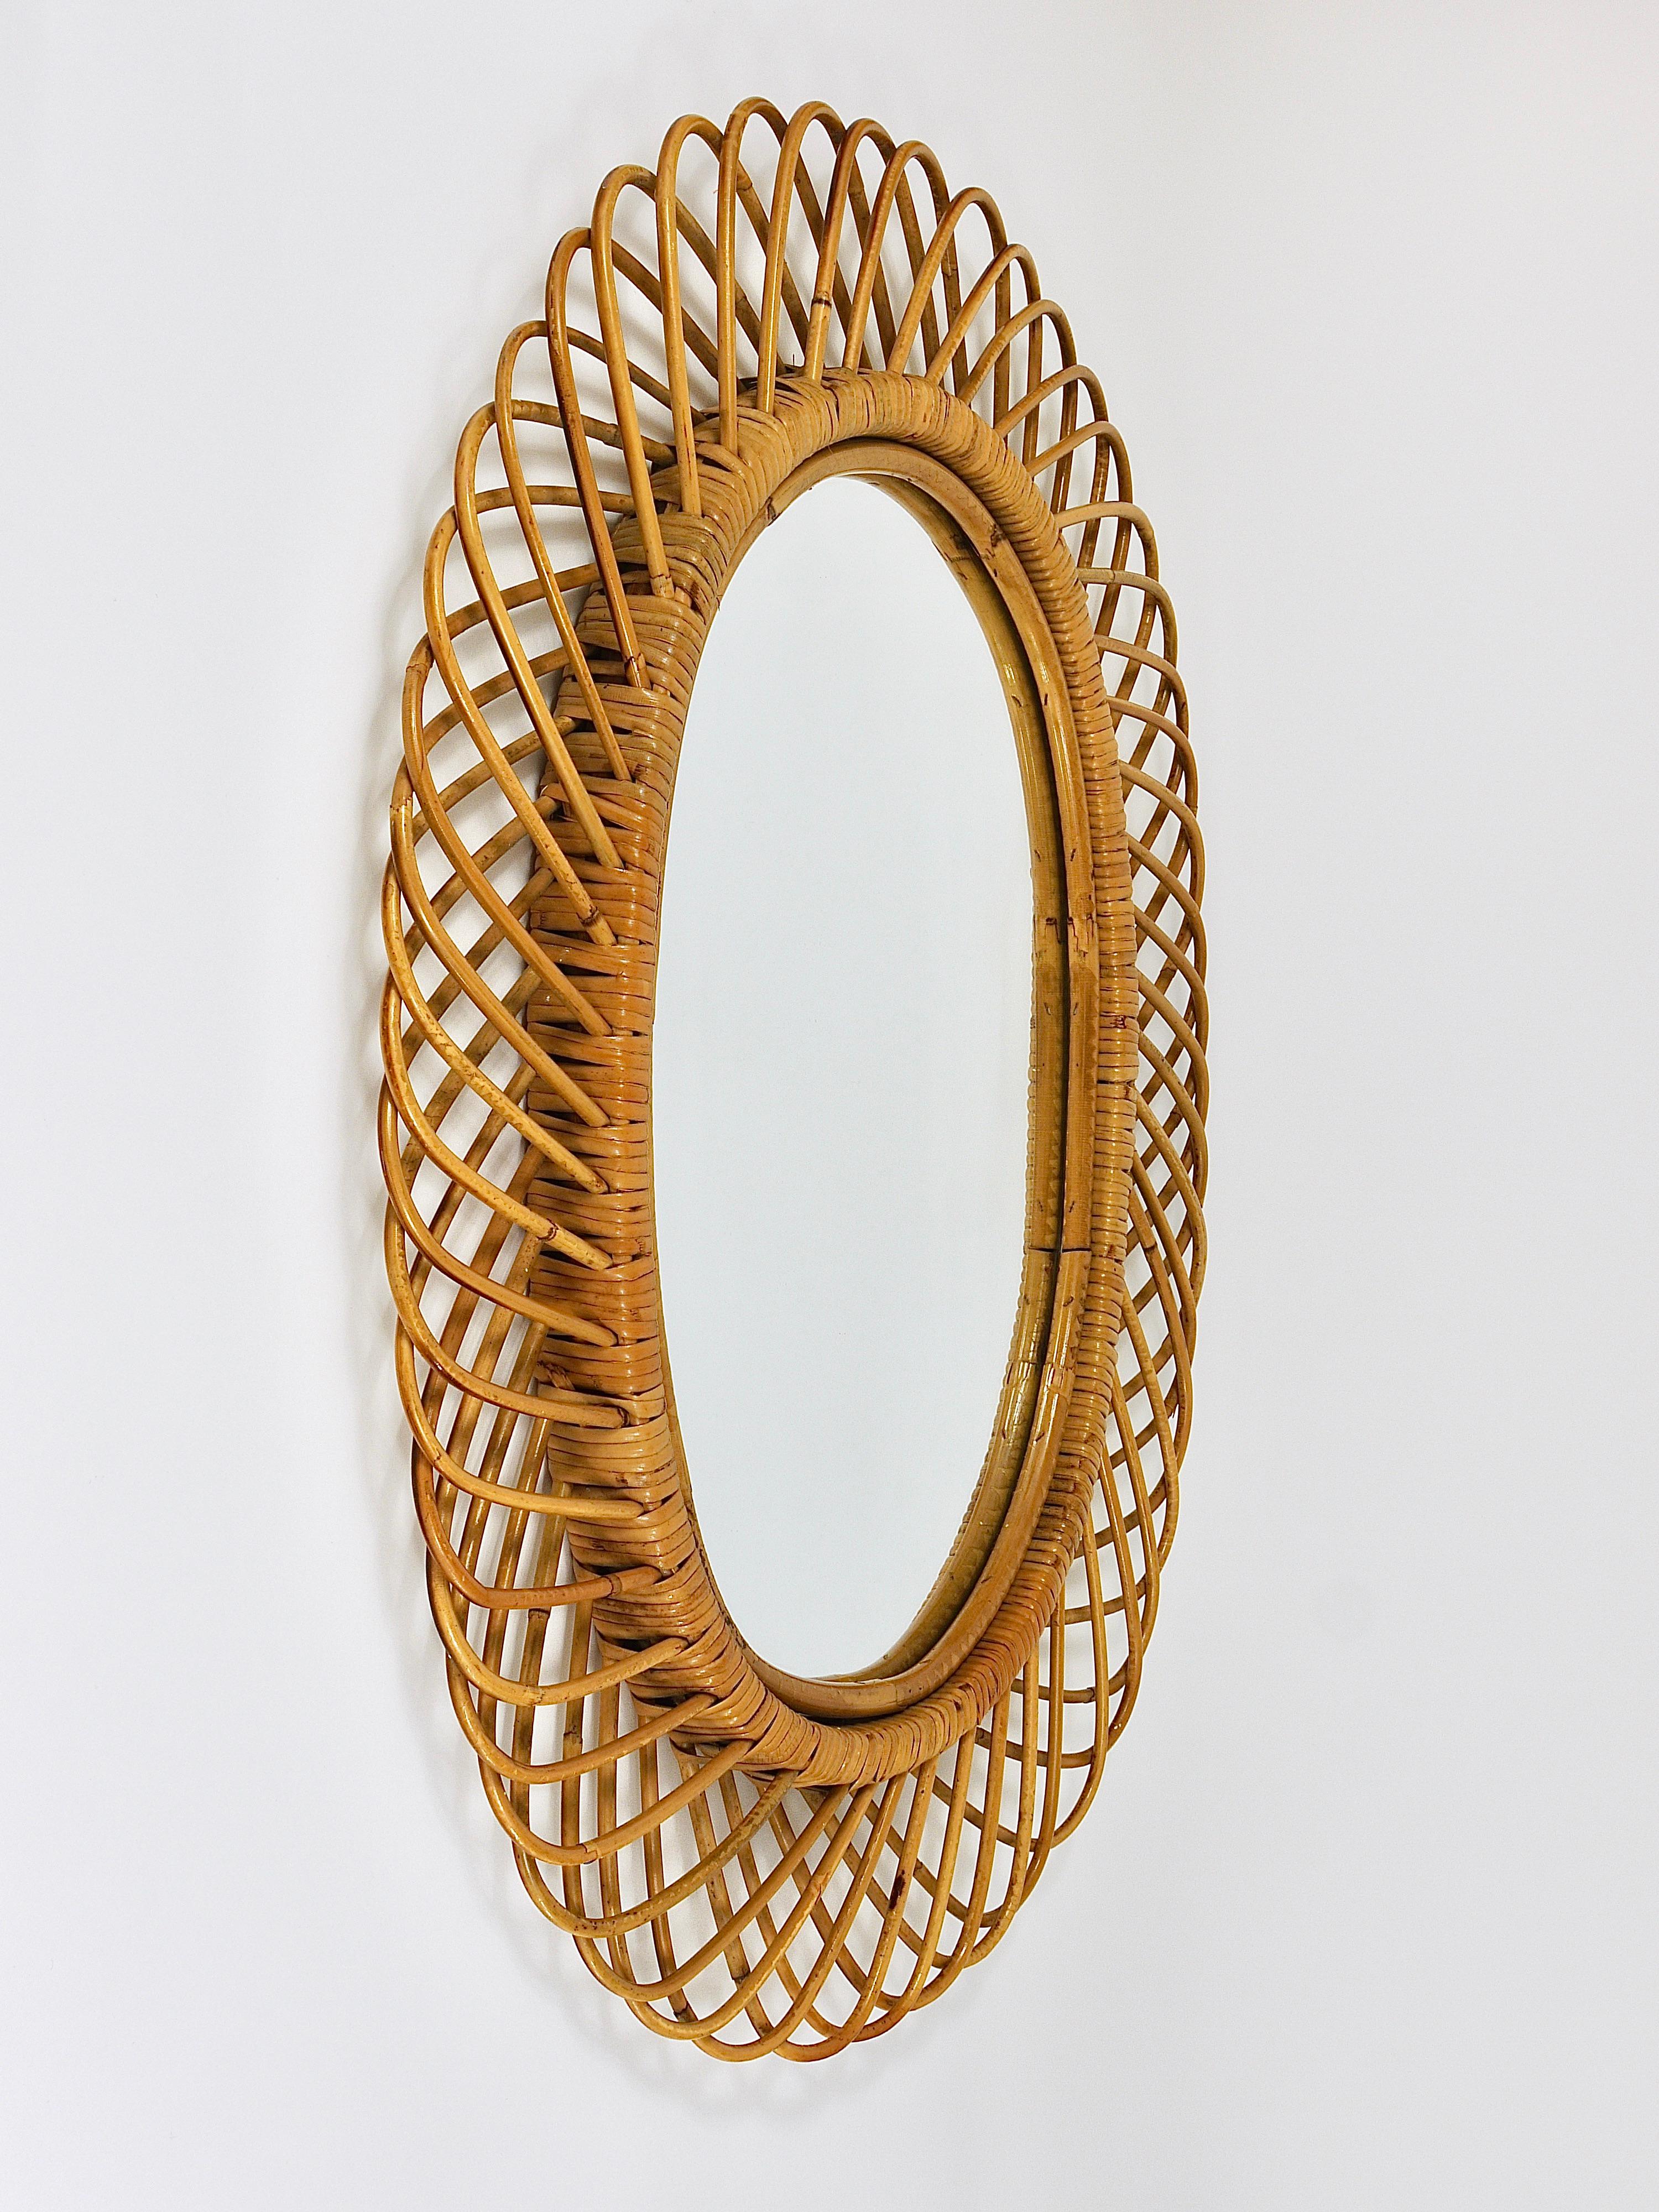 20th Century Huge Franco Albini Oval Midcentury Rattan Bamboo Sunburst Wall Mirror, 1950s For Sale